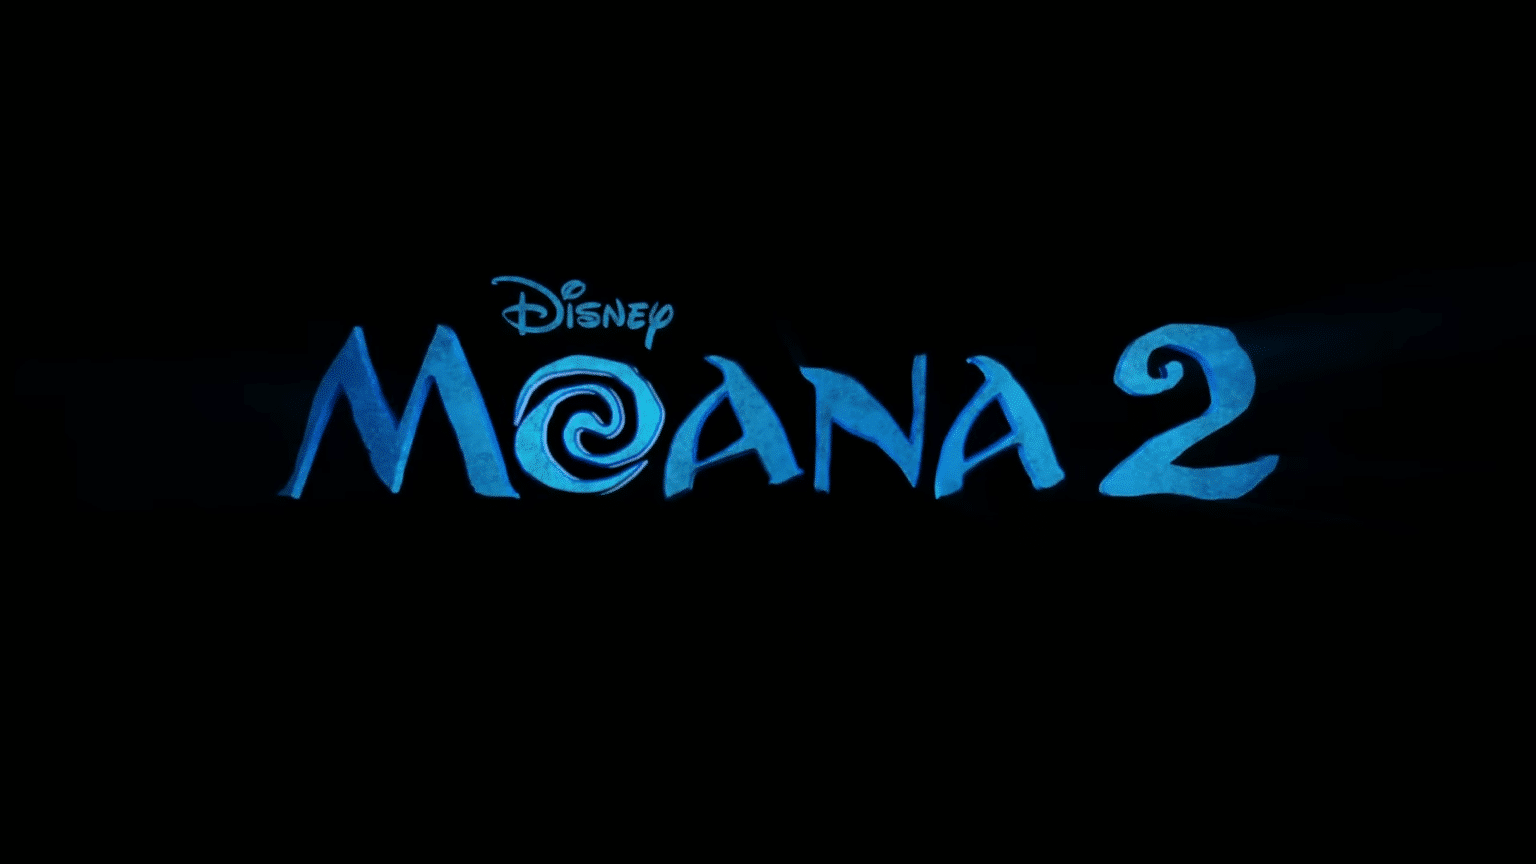 Moana 2 Teaser Trailer